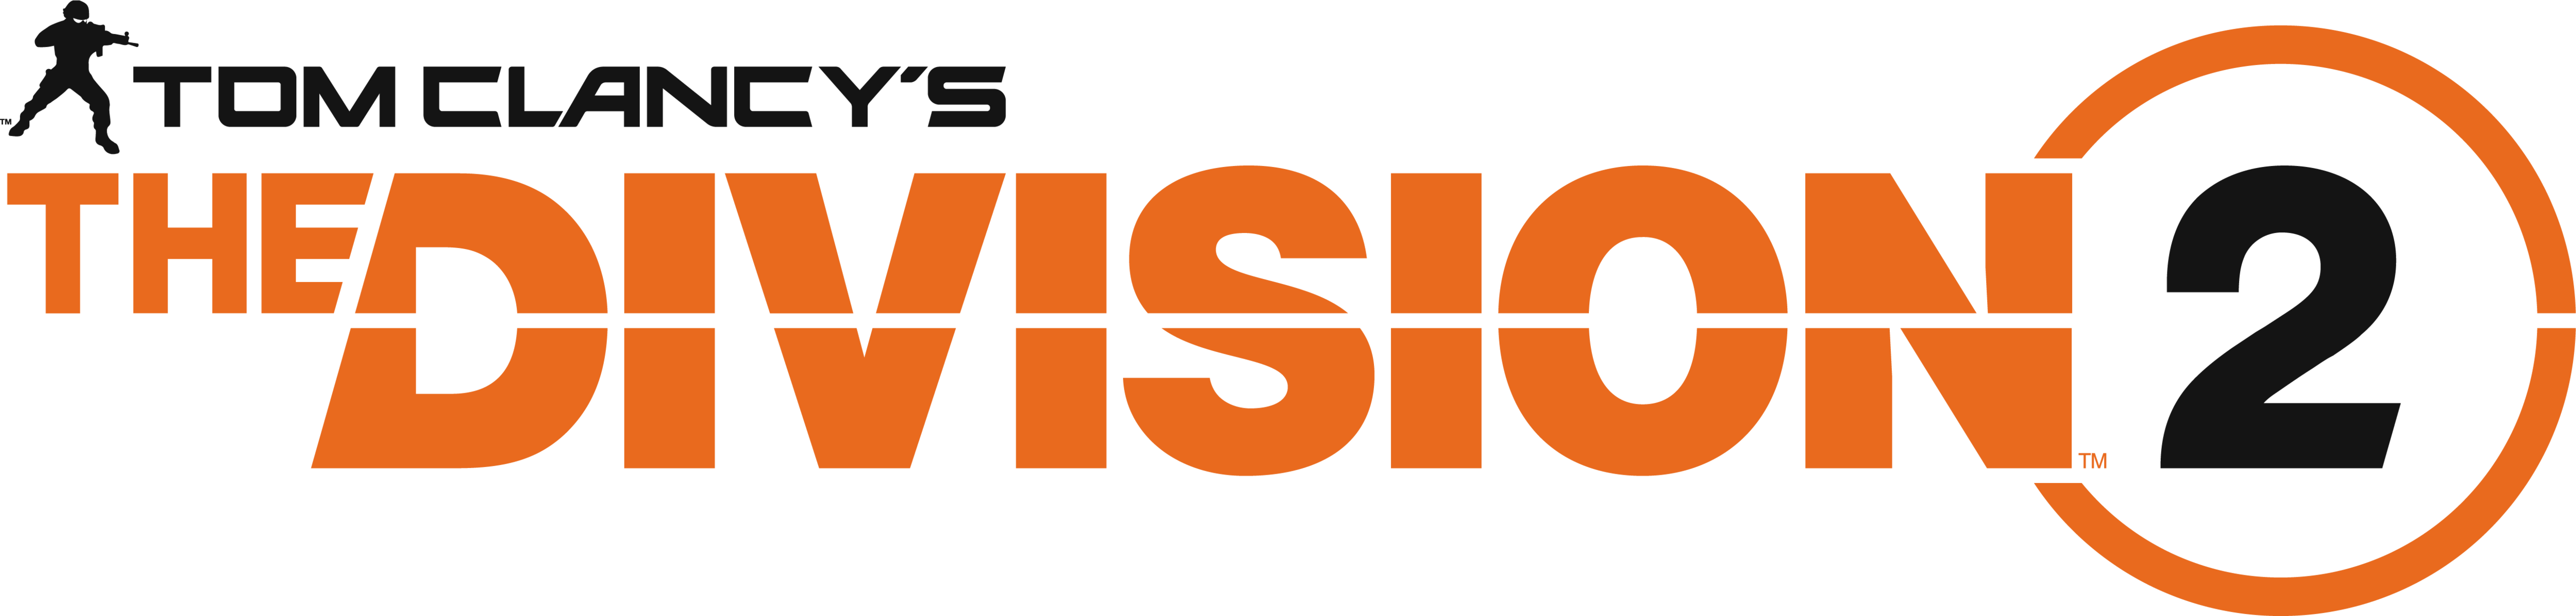 Division Logo - Referral Program | The Division | Ubisoft